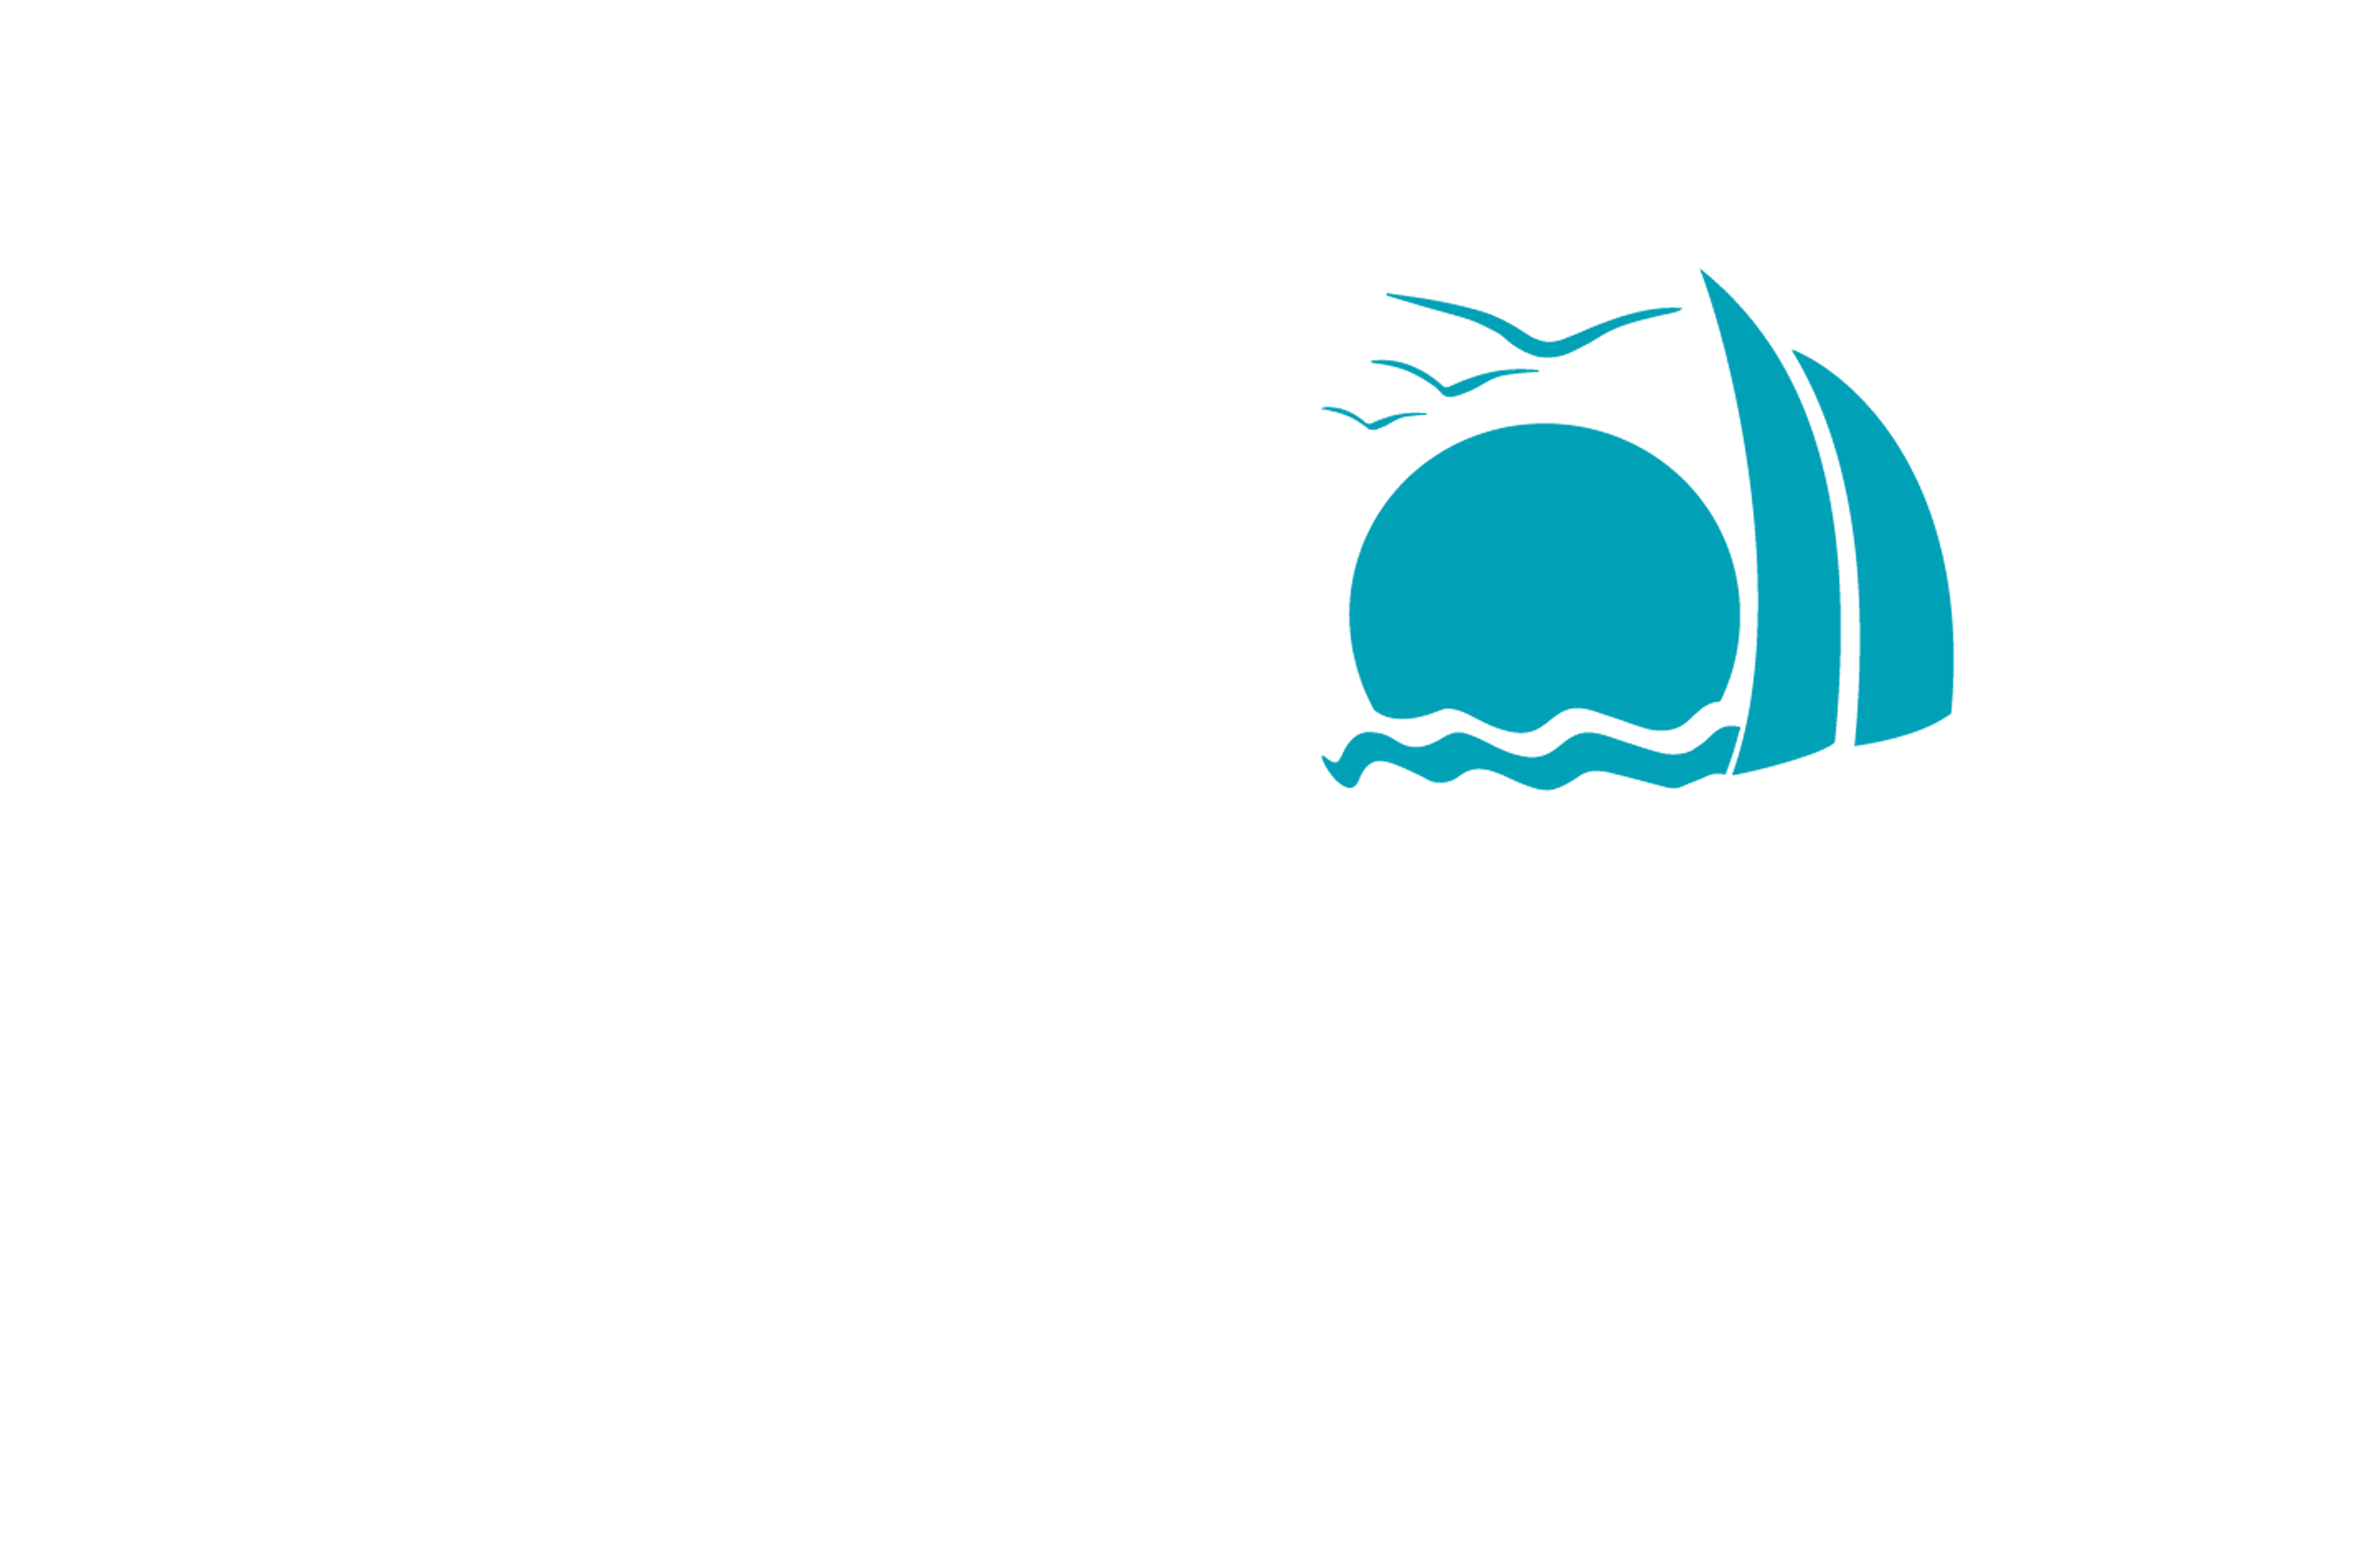 Gyro Beach Townhomes